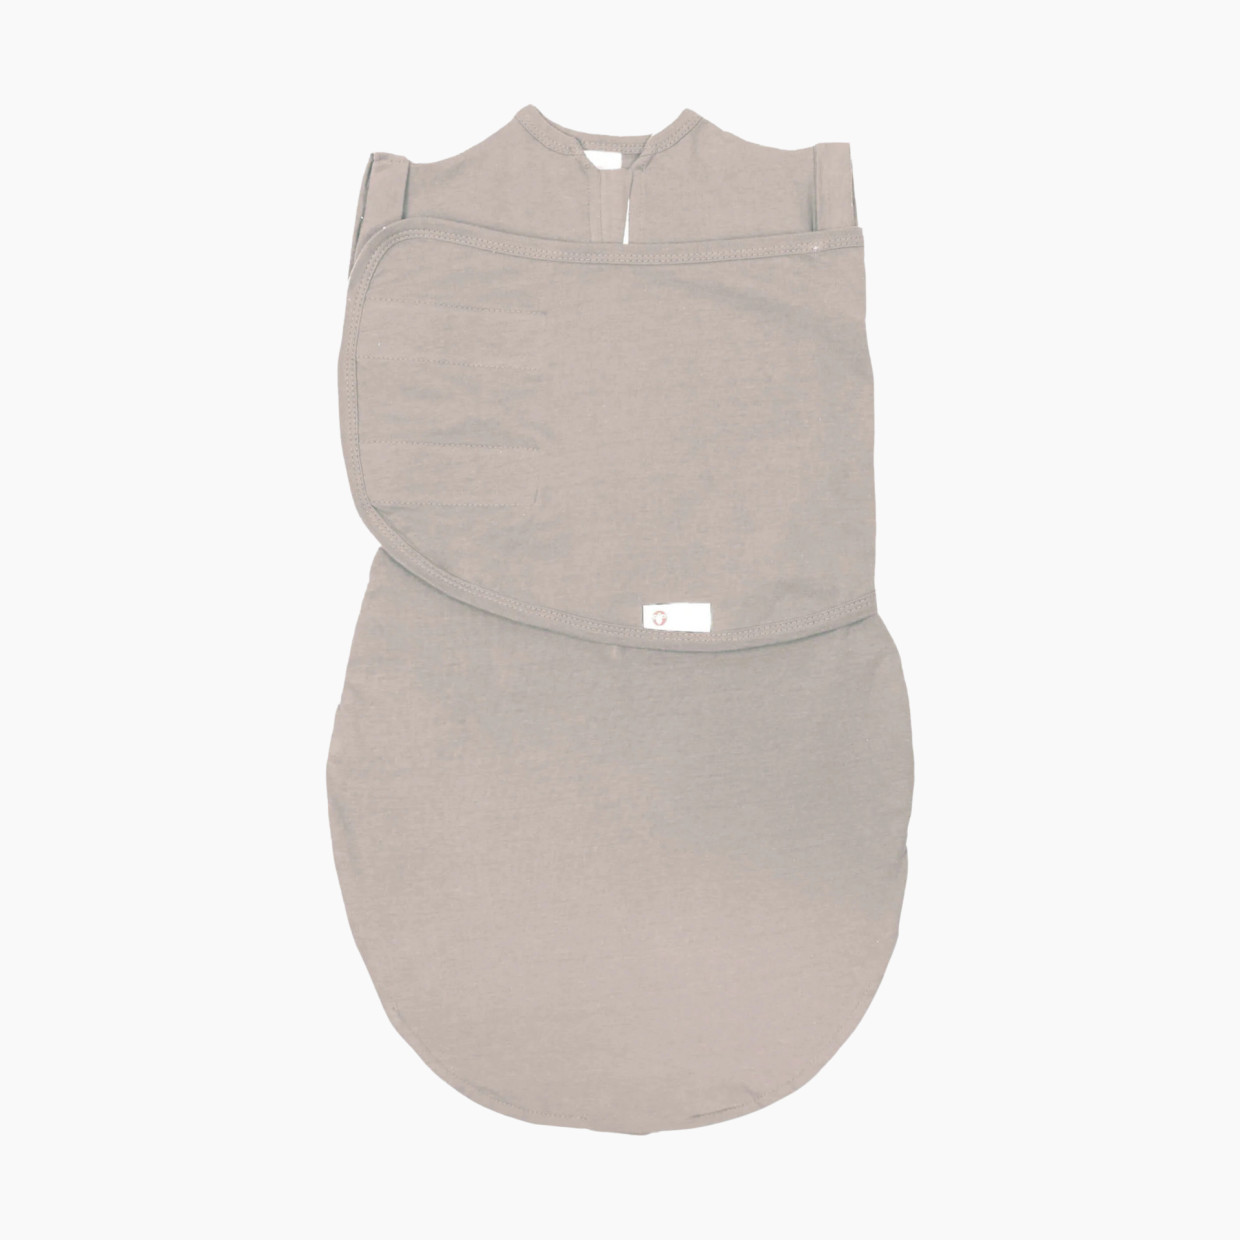 Embe Babies Short Sleeve Swaddle Sack - Chai, Medium/Large 12-18 Lbs.